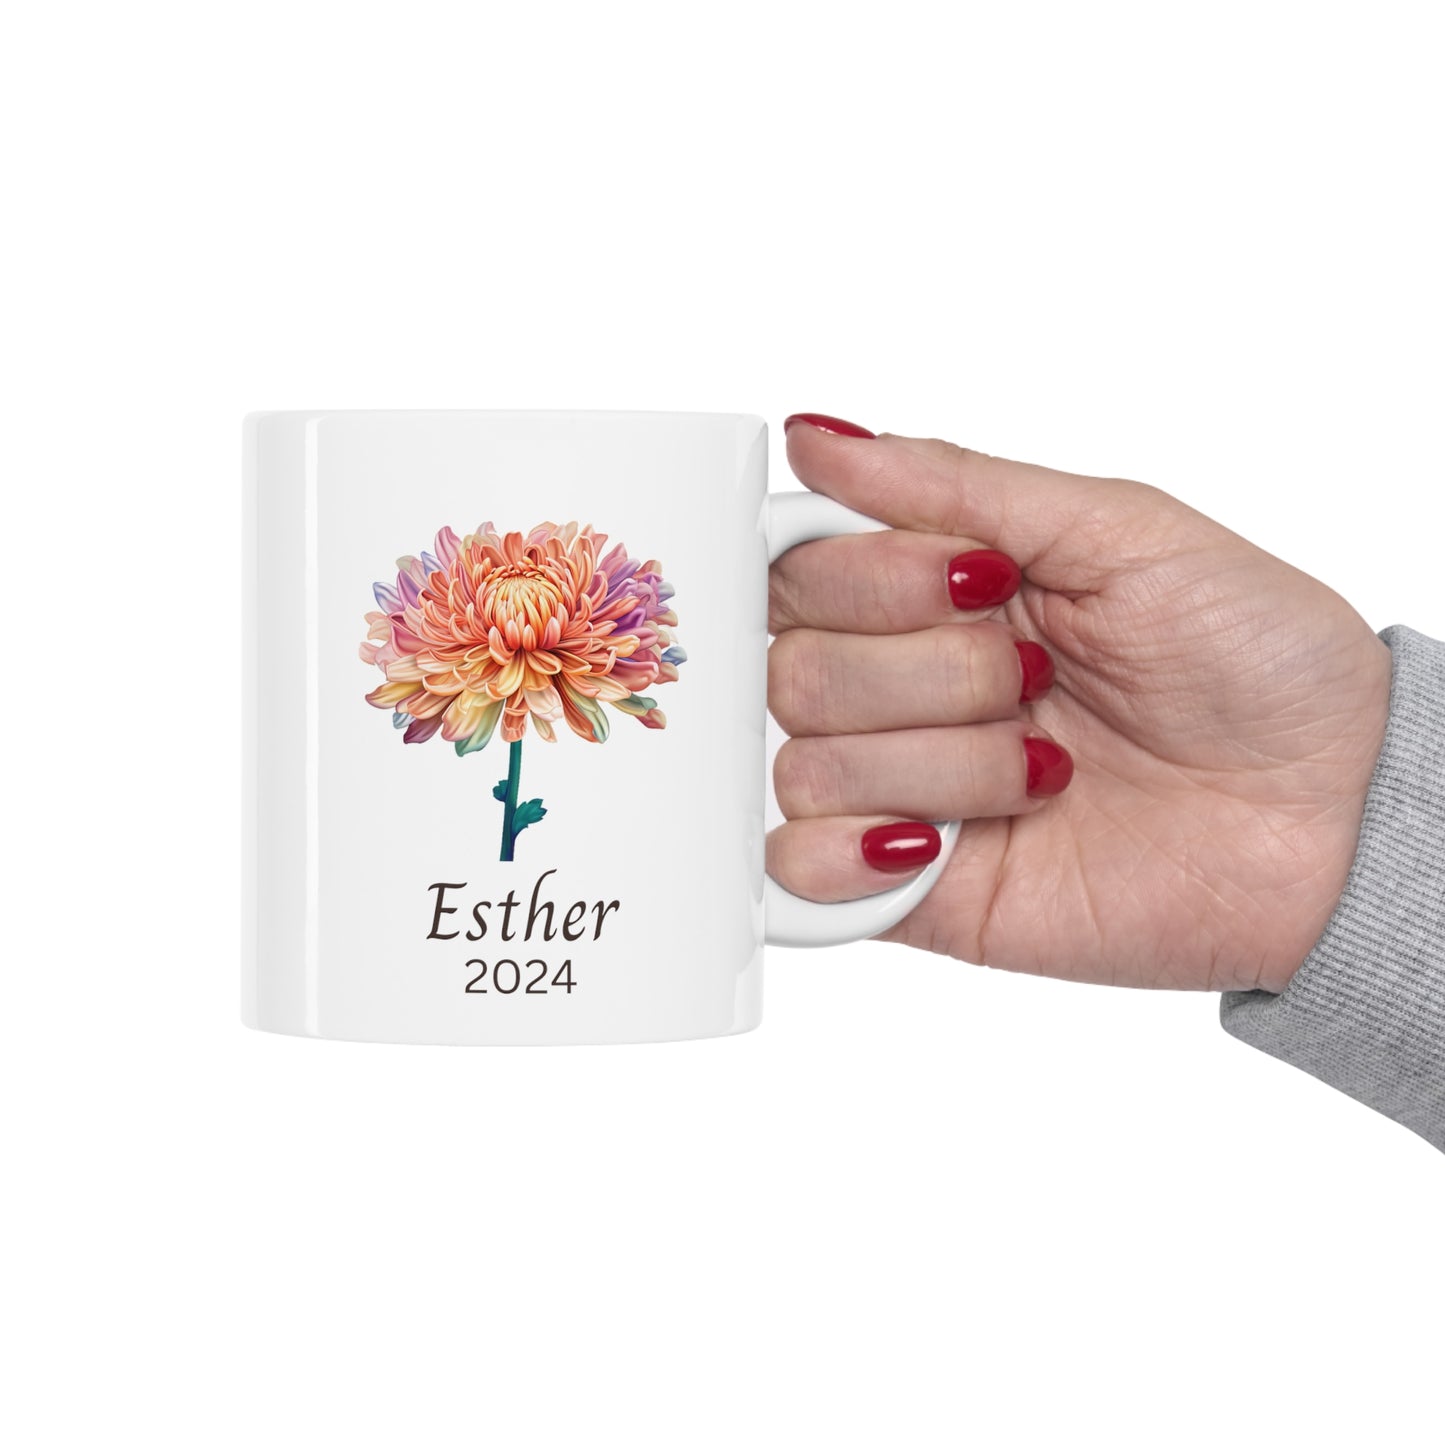 Personalized mug Birth flower November